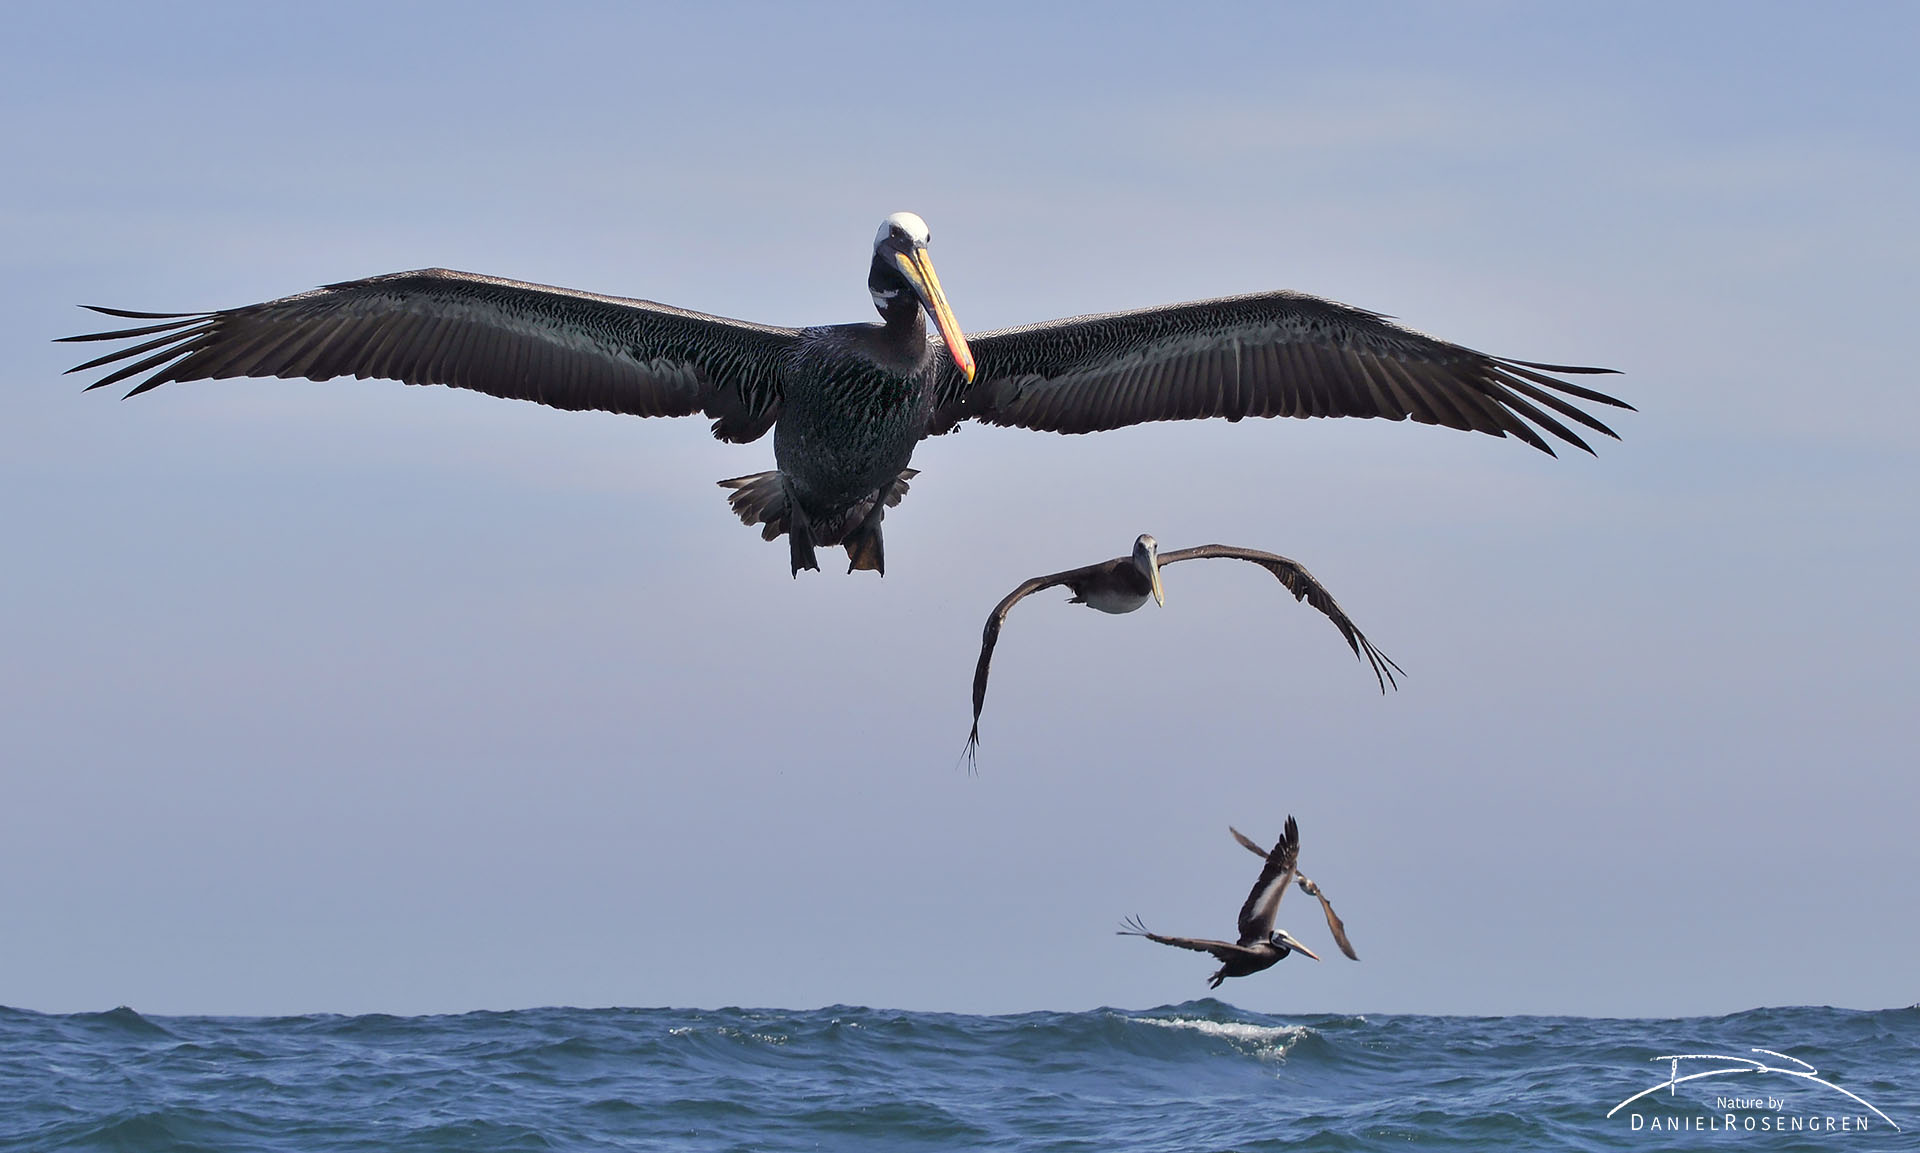 Peruvian pelicans arriving at the feeding frenzy. © Daniel Rosengren